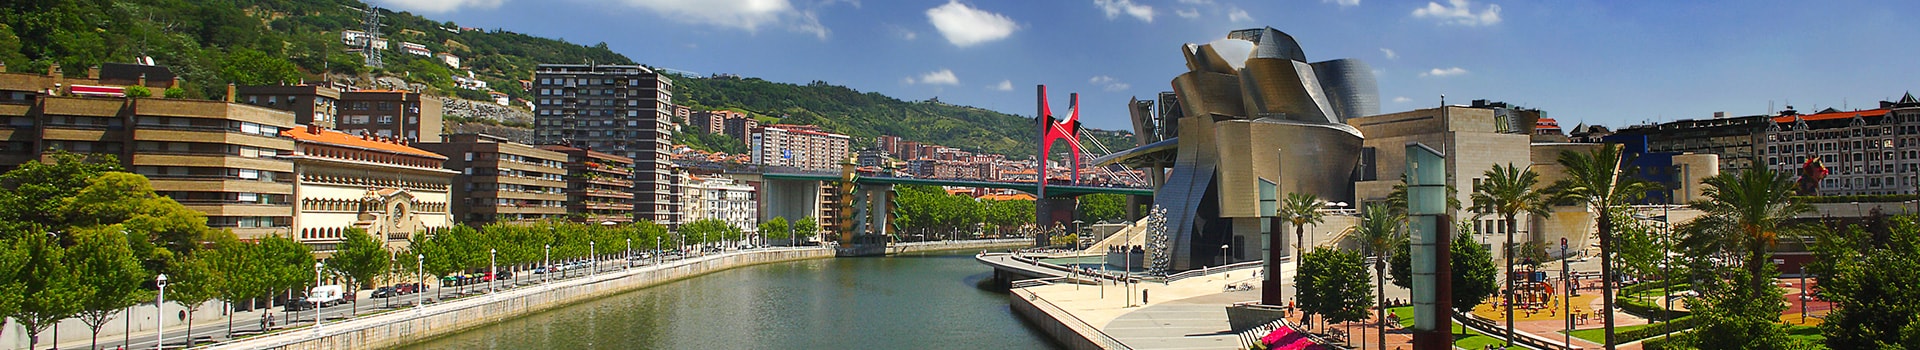 Gérone - Costa Brava - Bilbao